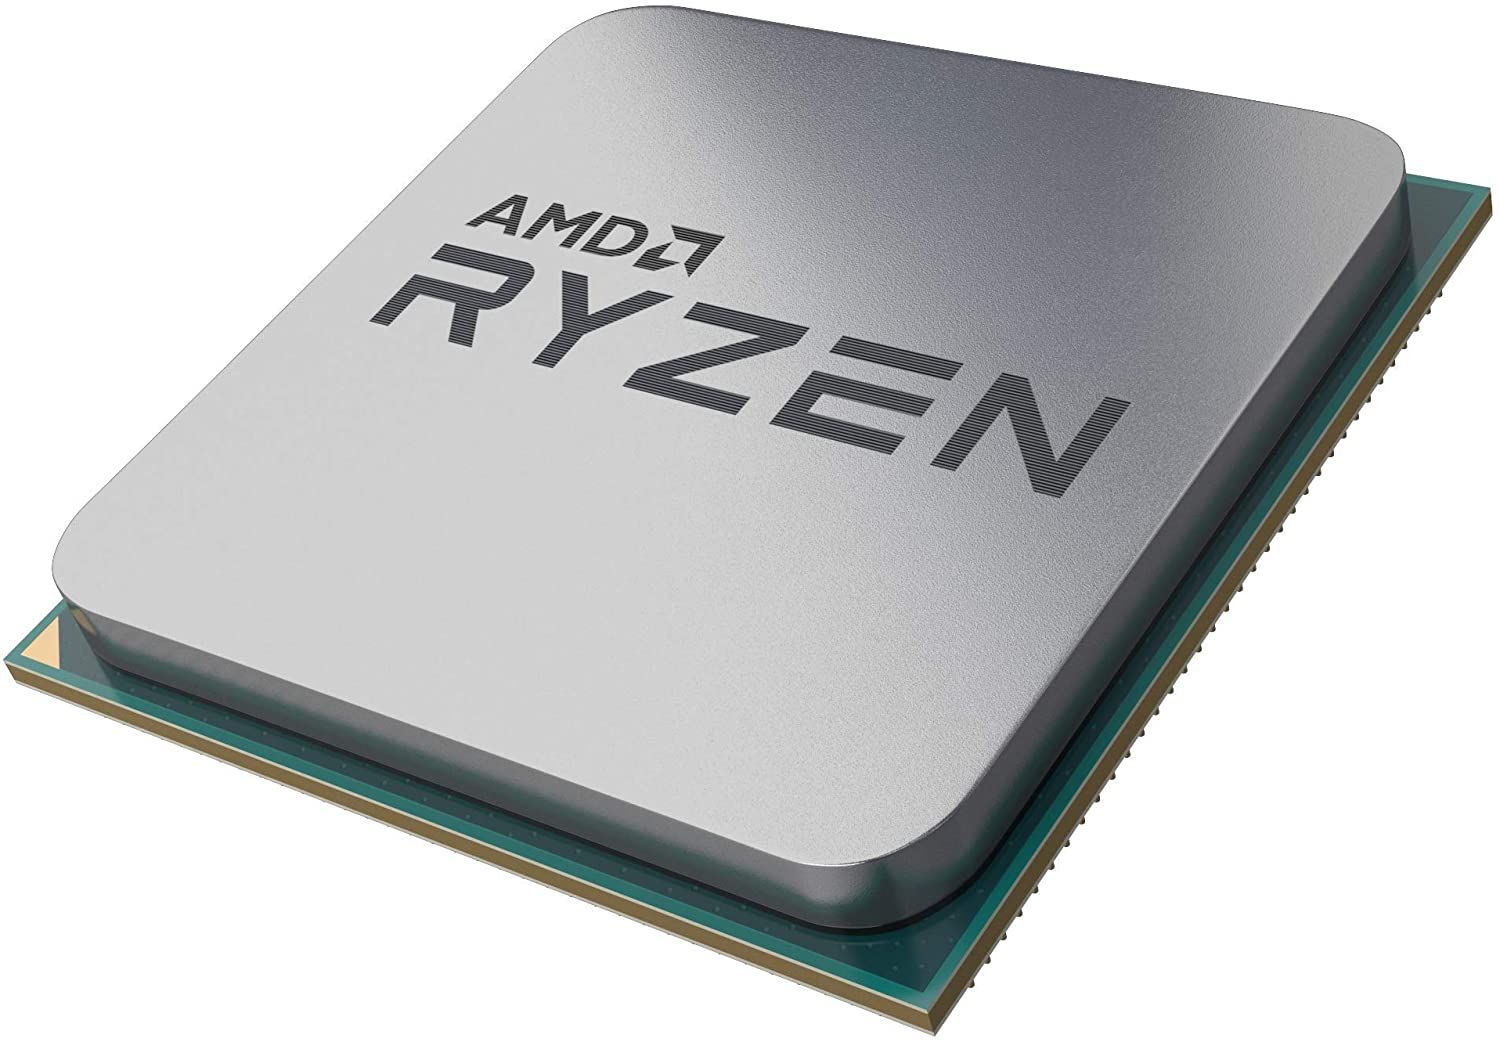 AMD Ryzen 5 3600 6-Core, 12-Thread Unlocked Desktop Processor c